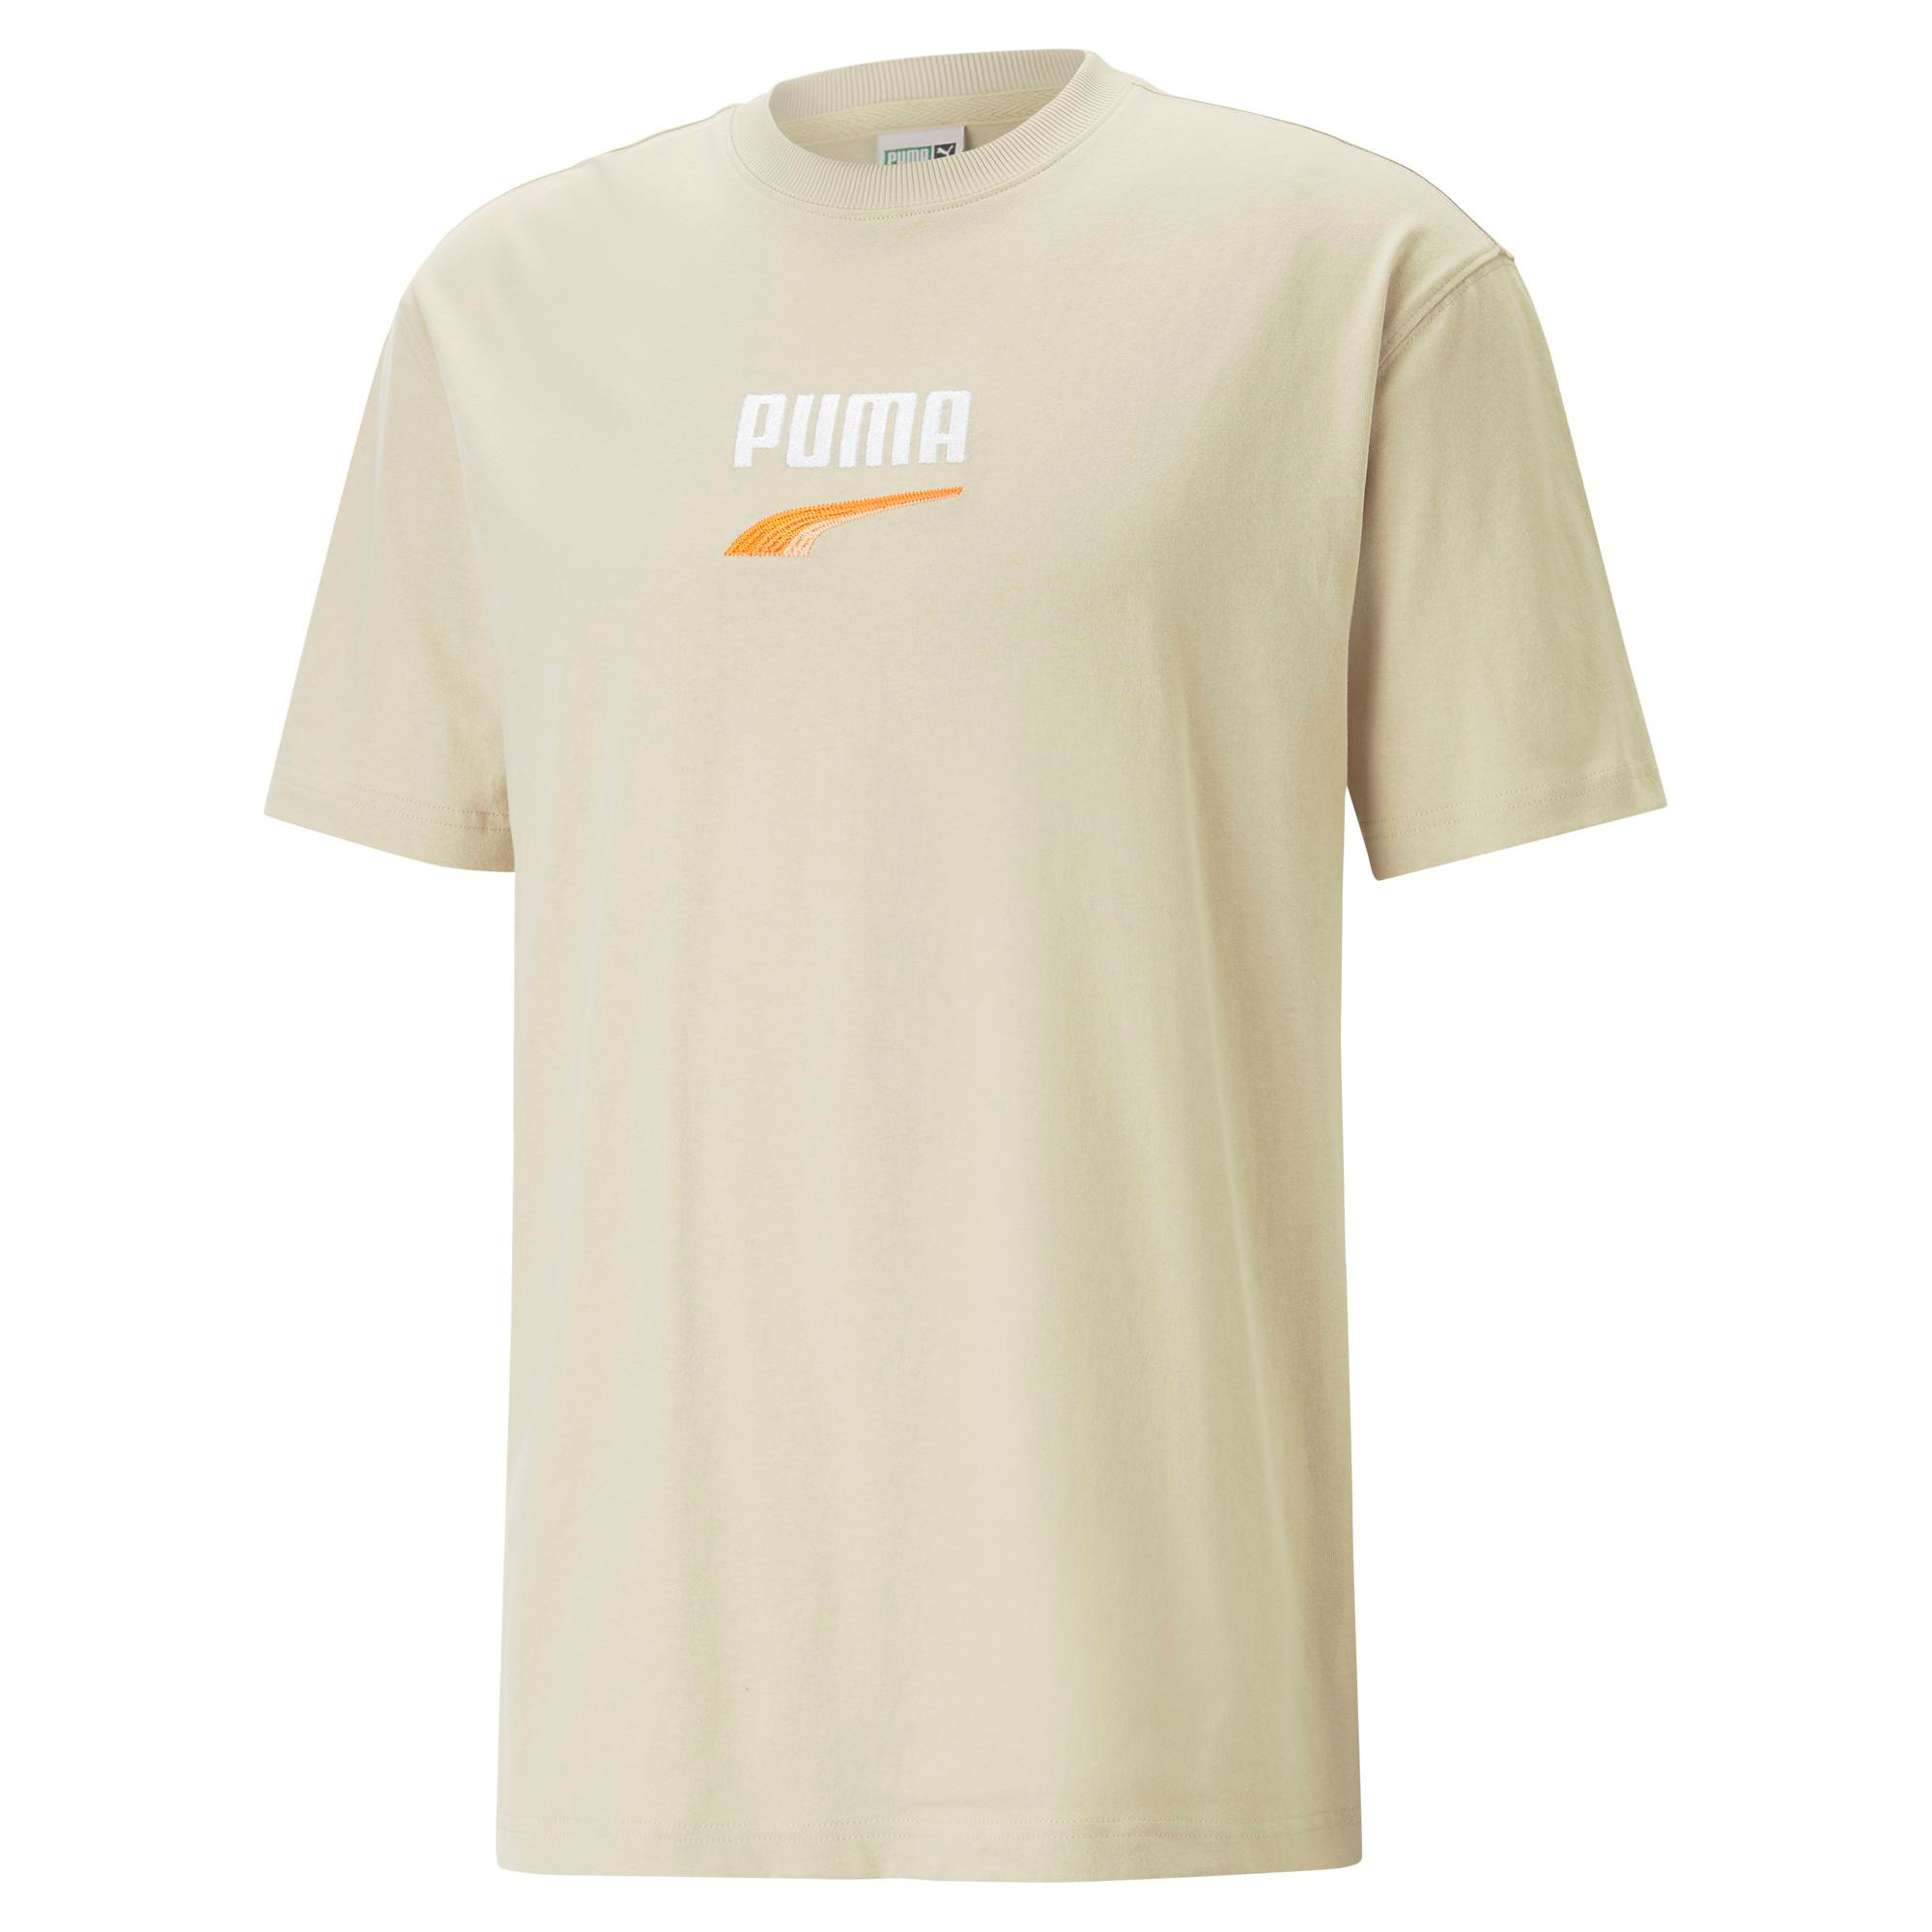 Puma - T-shirt in cotone con logo, Beige chiaro, large image number 0